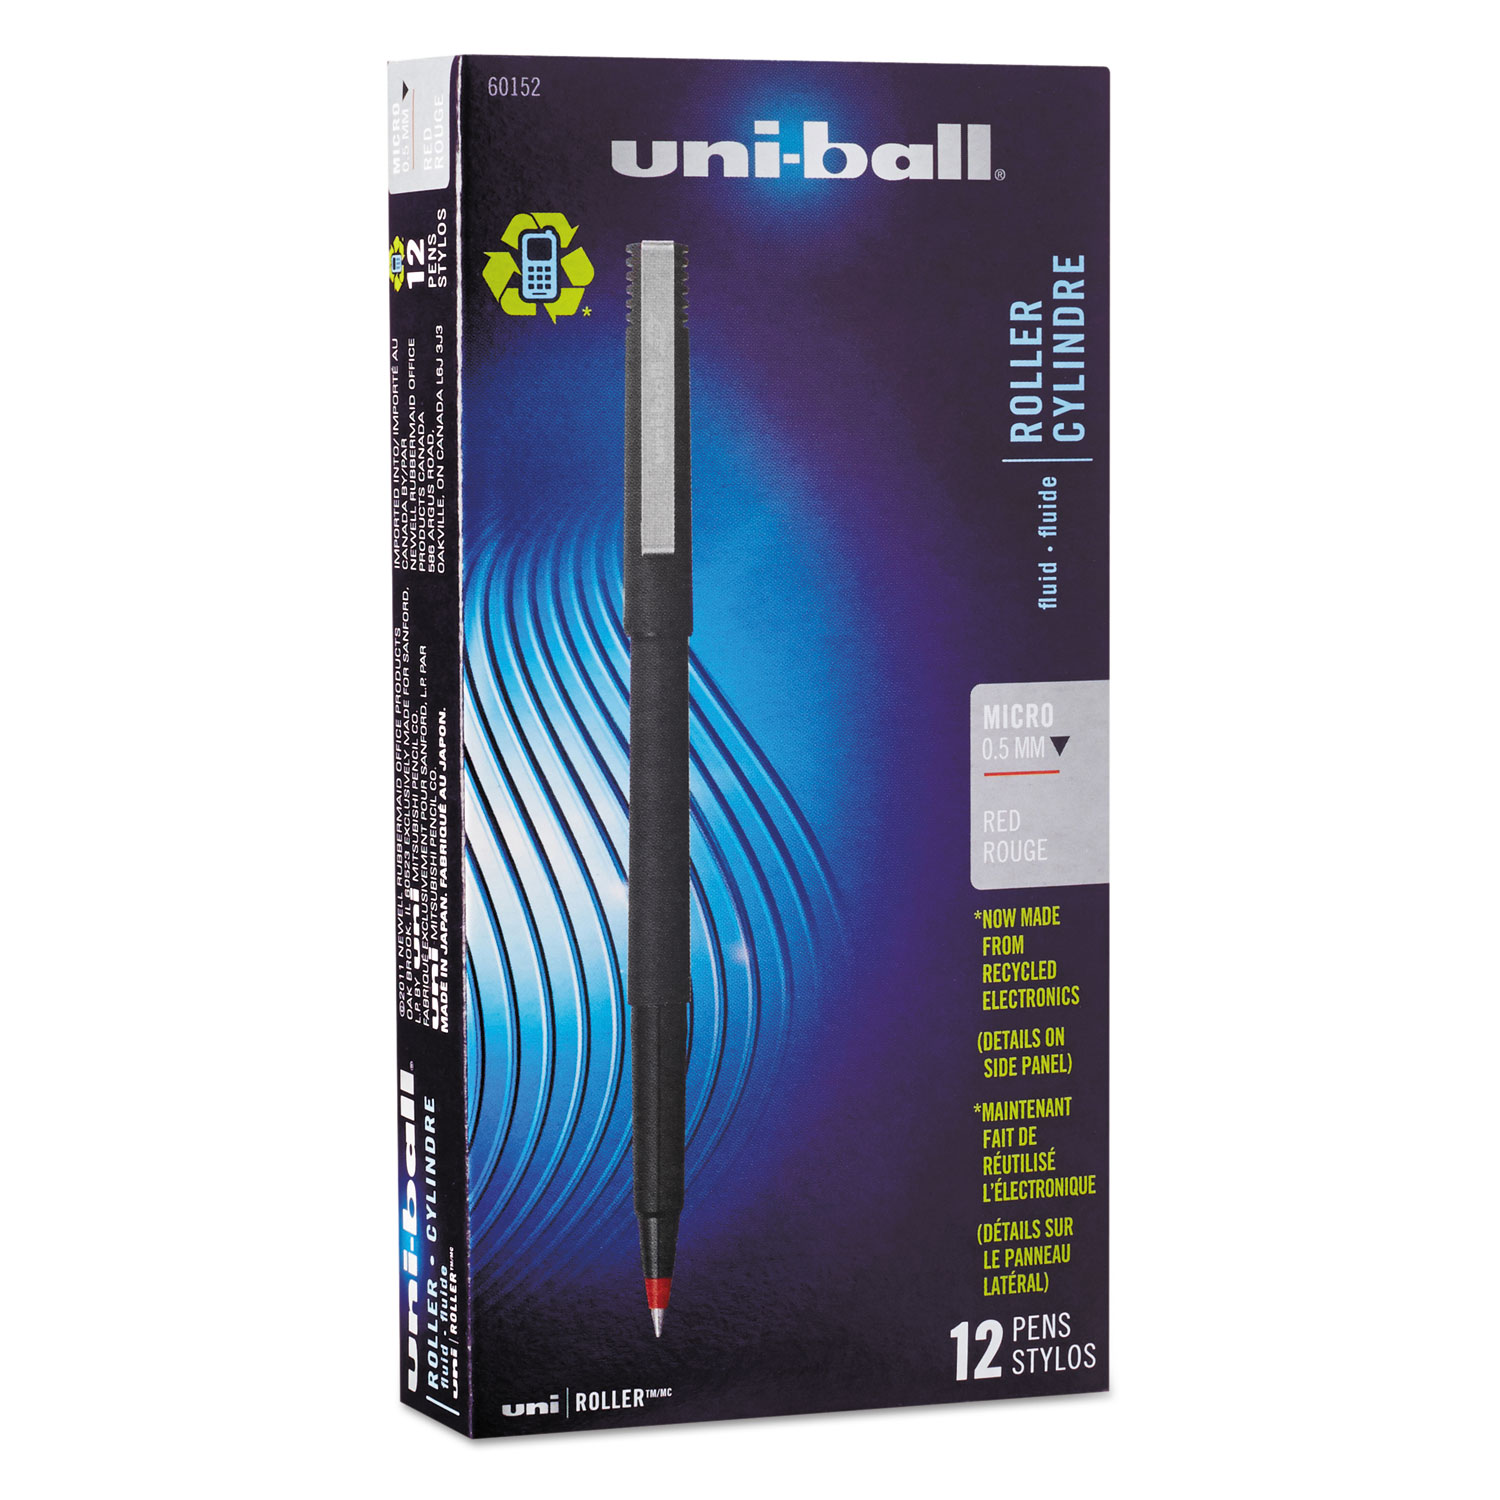  uni-ball 60152 Stick Roller Ball Pen, Micro 0.5mm, Red Ink, Black Matte Barrel, Dozen (UBC60152) 